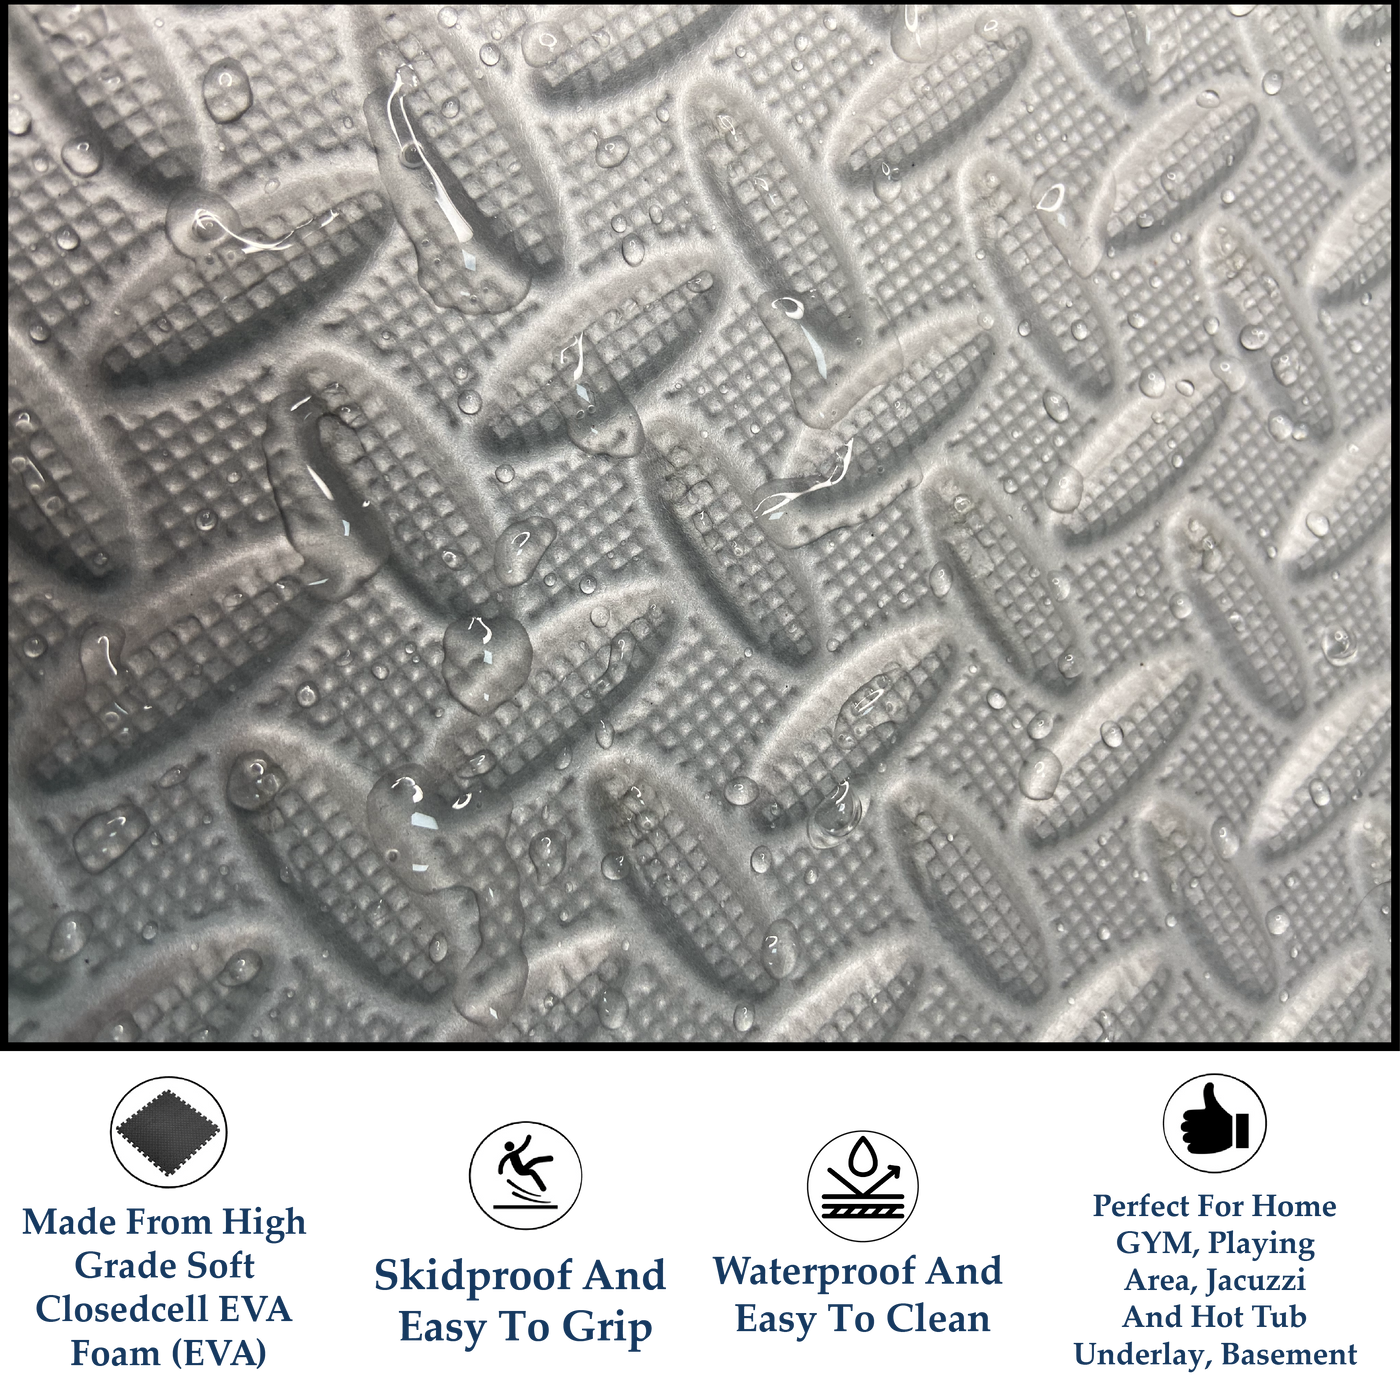 Interlocking EVA Floor Mat - Pink, Grey & Navy Blue (Set of 6pcs.) - 12mm